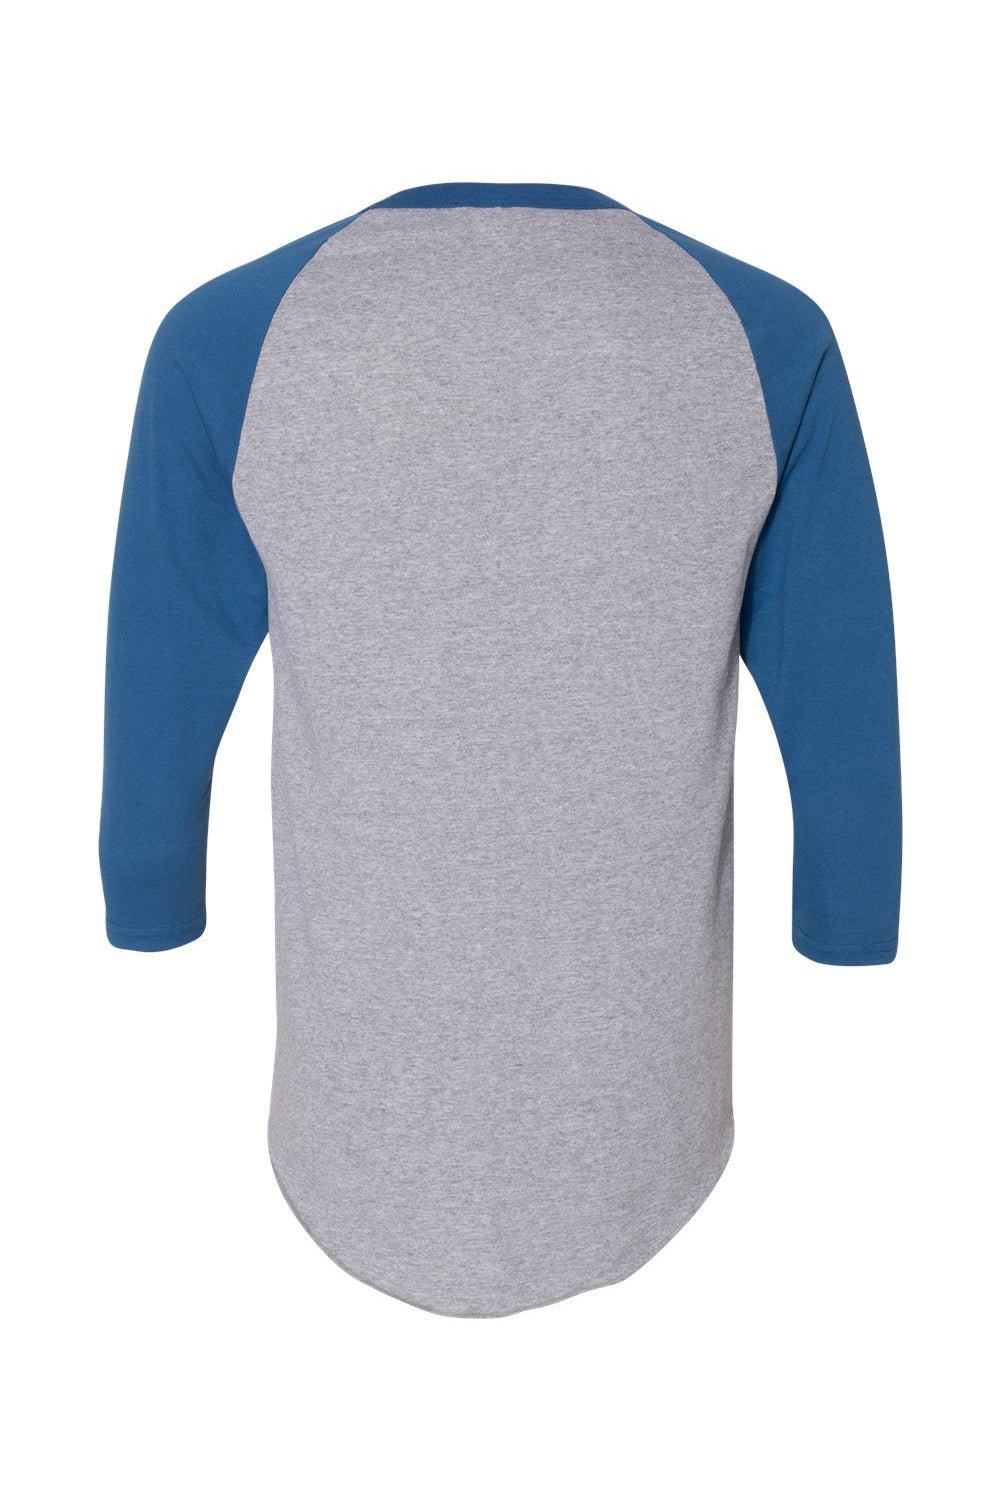 Augusta Sportswear 4420 Mens Raglan 3/4 Sleeve Crewneck T-Shirt Heather Grey/Royal Blue Flat Back